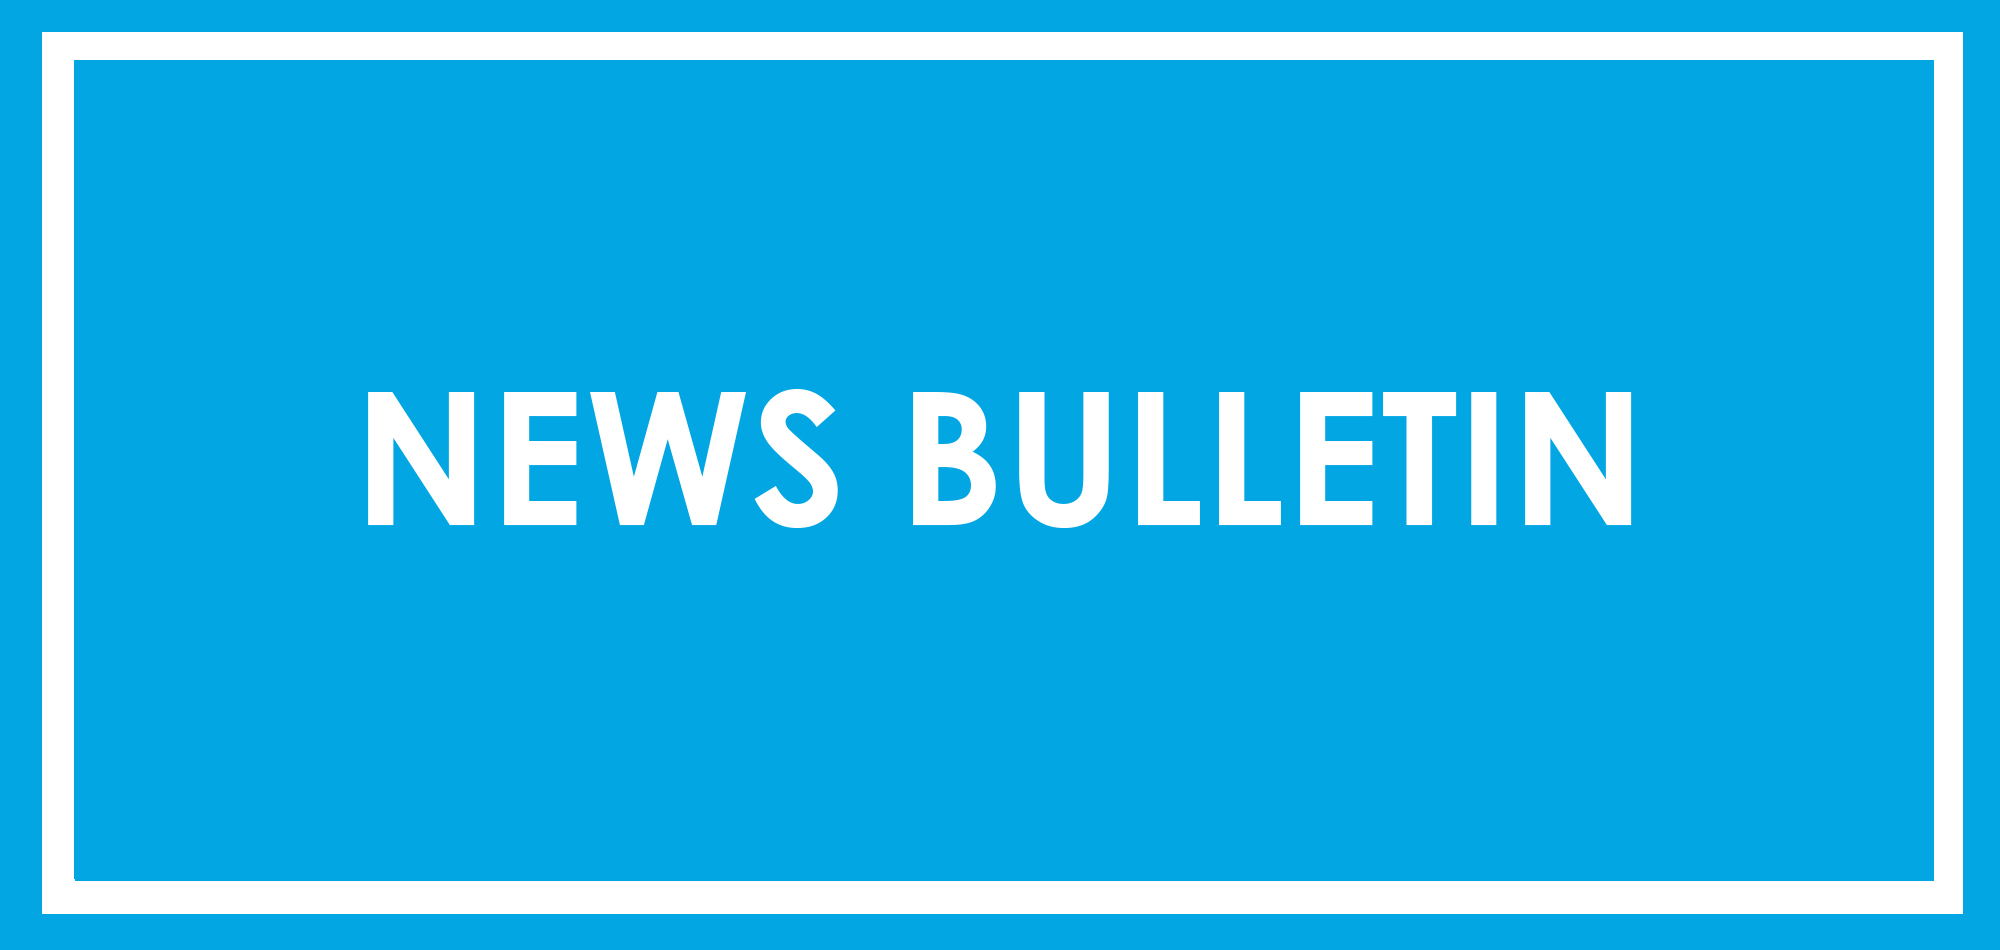 News Bulletin - 02.07.20